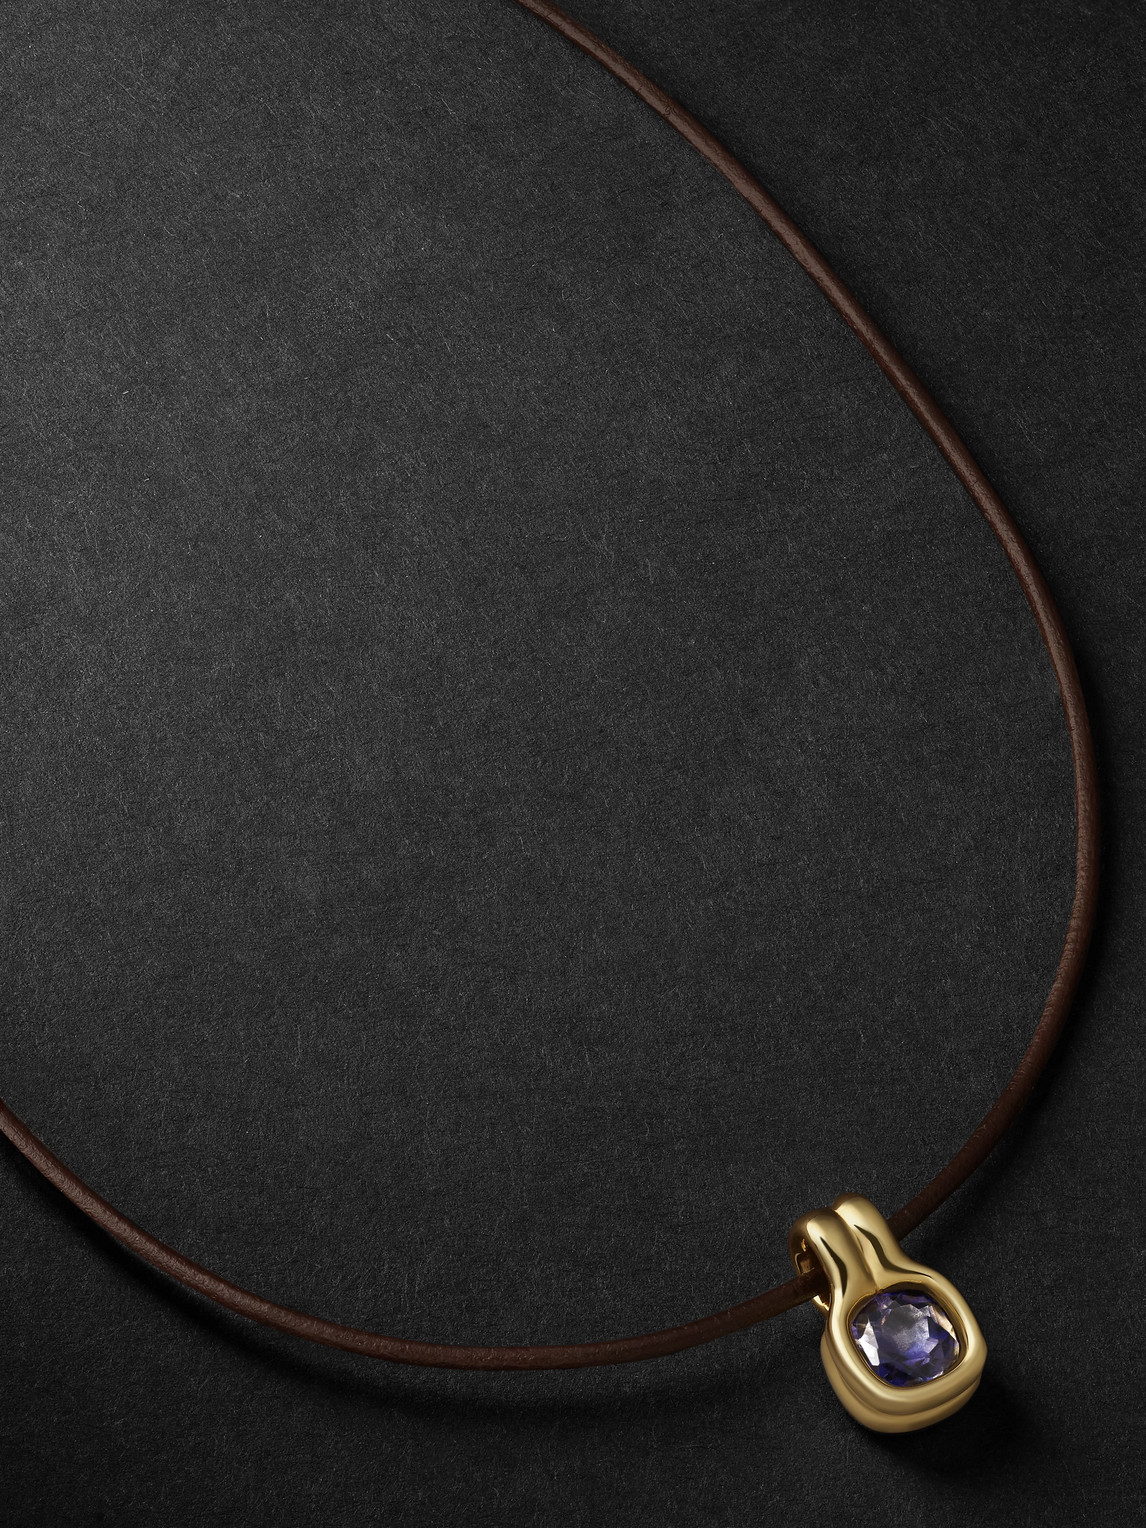 Fernando Jorge Cushion 18-karat Gold, Leather And Iolite Necklace